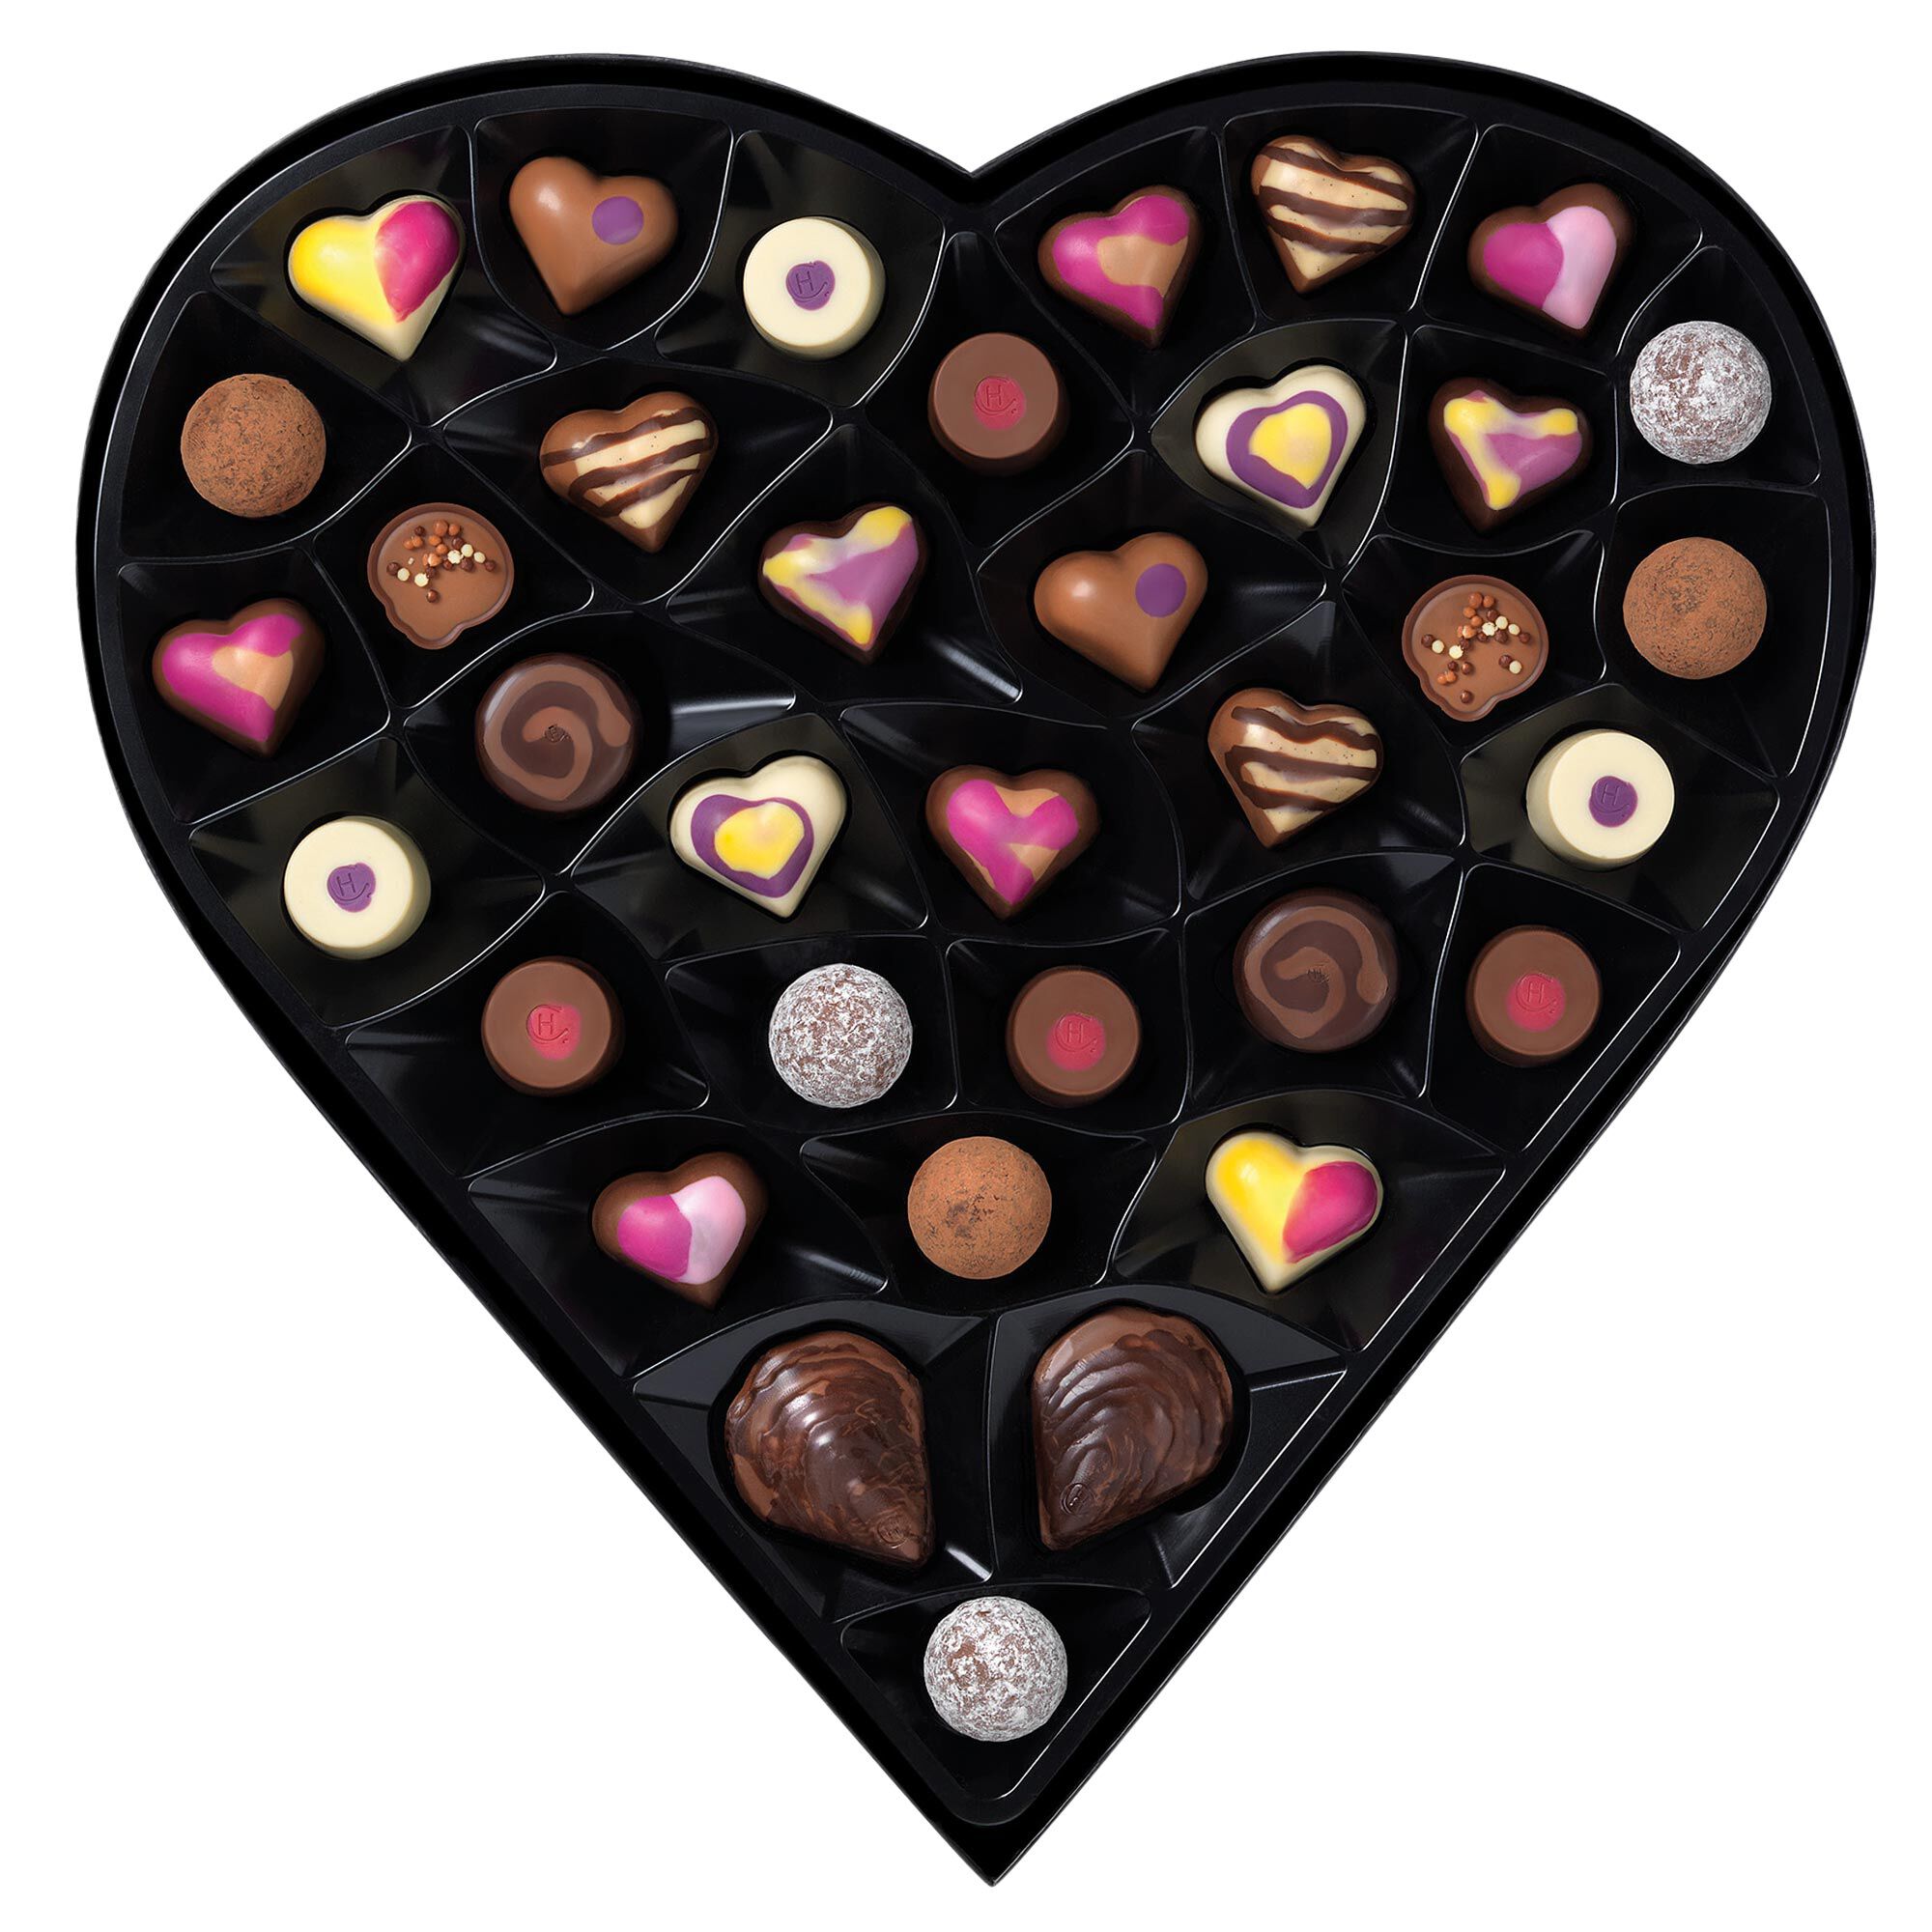 Heart Shaped Chocolate Box | Valentine 